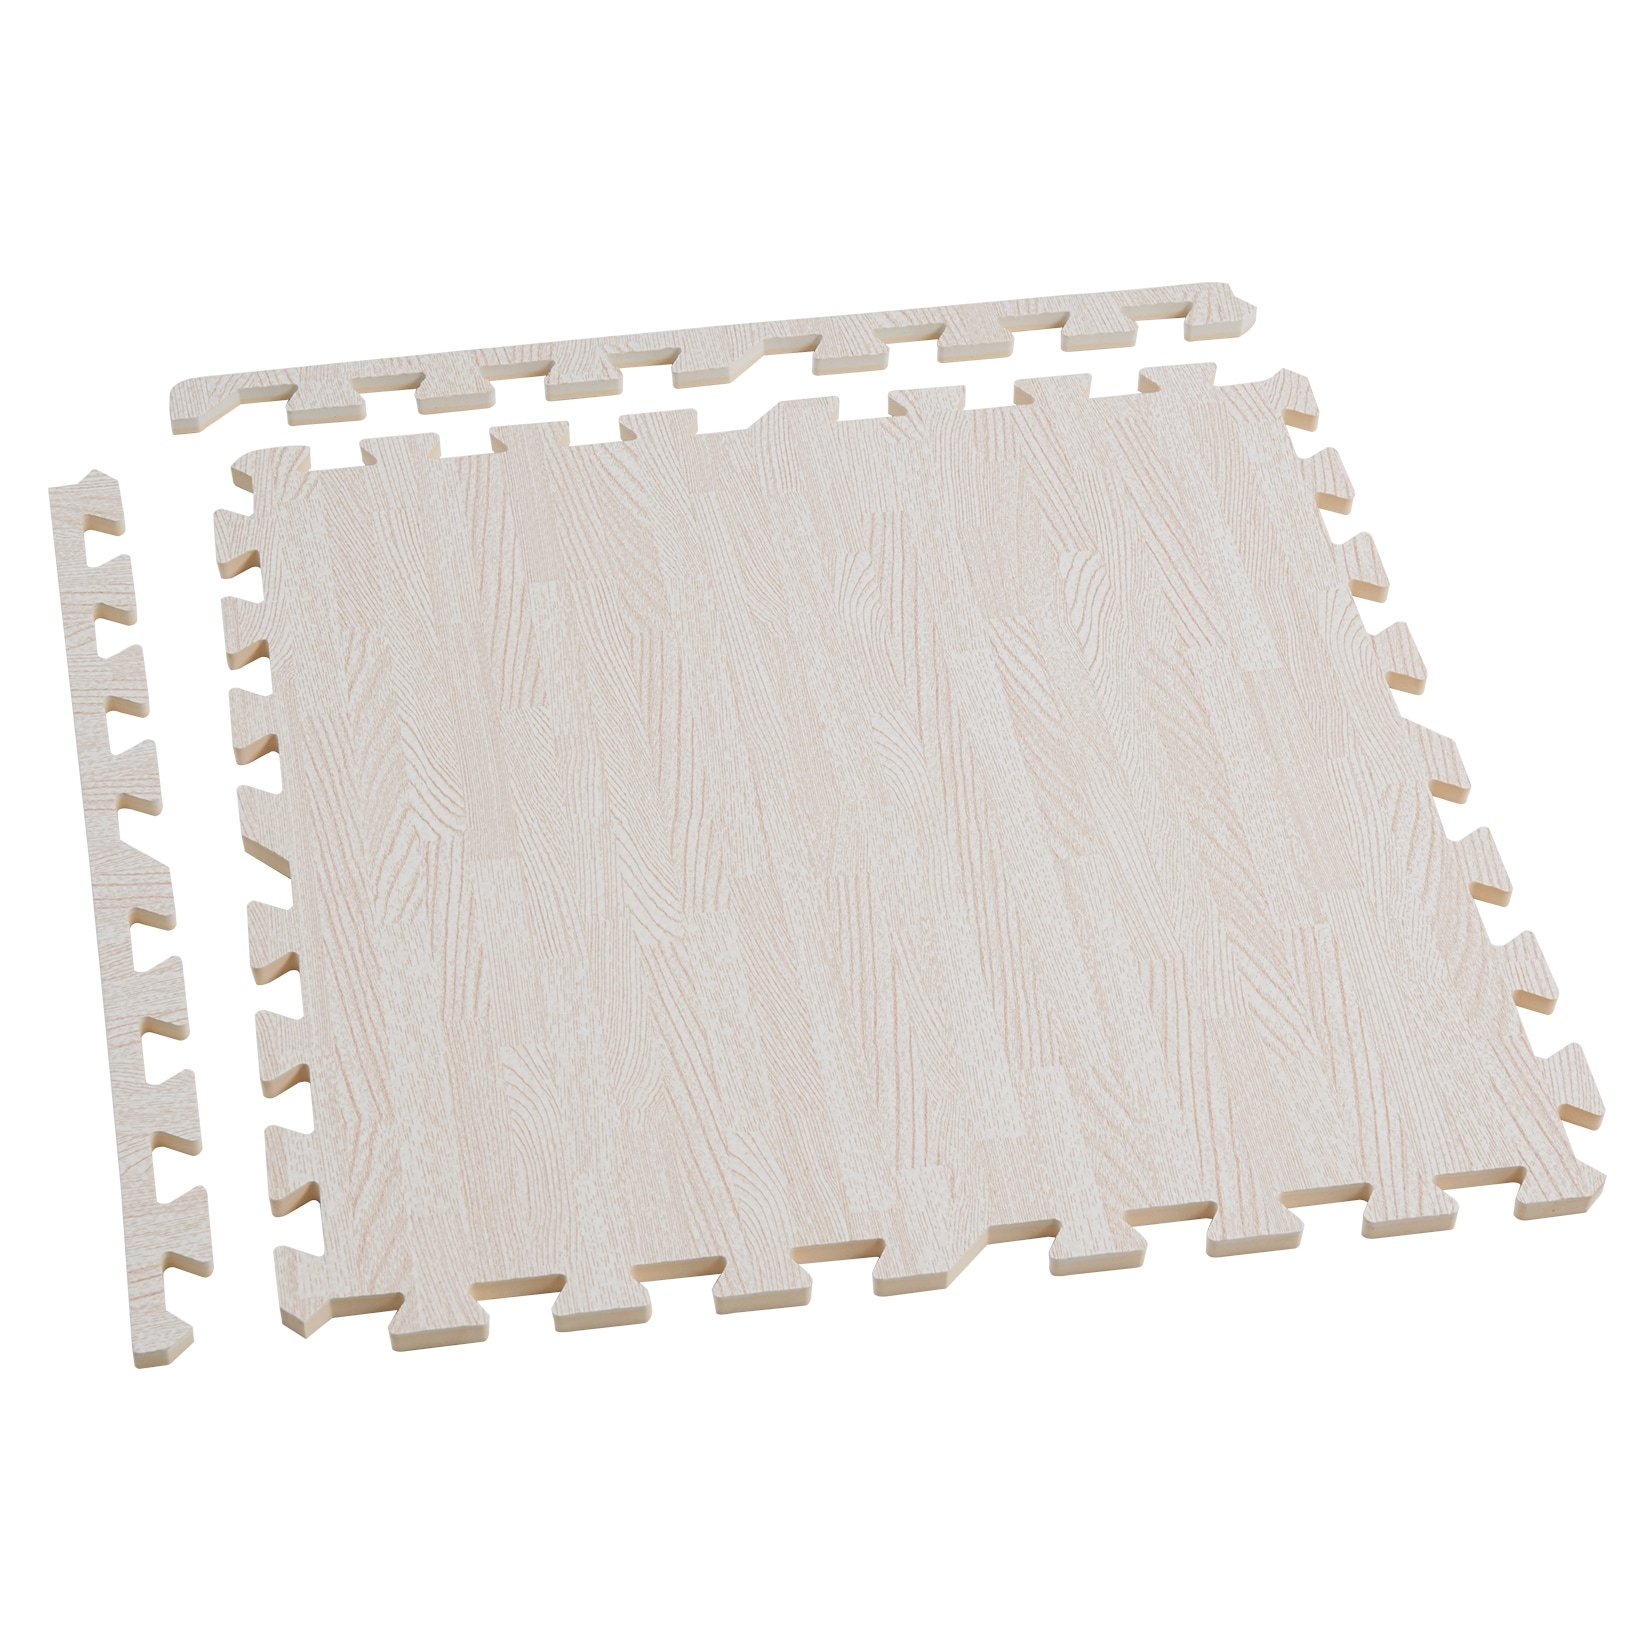 24 Pcs (4x6 Arrangement) Multicolor Puzzle Floor Mats, 12 X 12 EVA Foam  Interlocking Tiles, Comfortable Exercise and Play Mat, 0.47 Thick(Color:14)